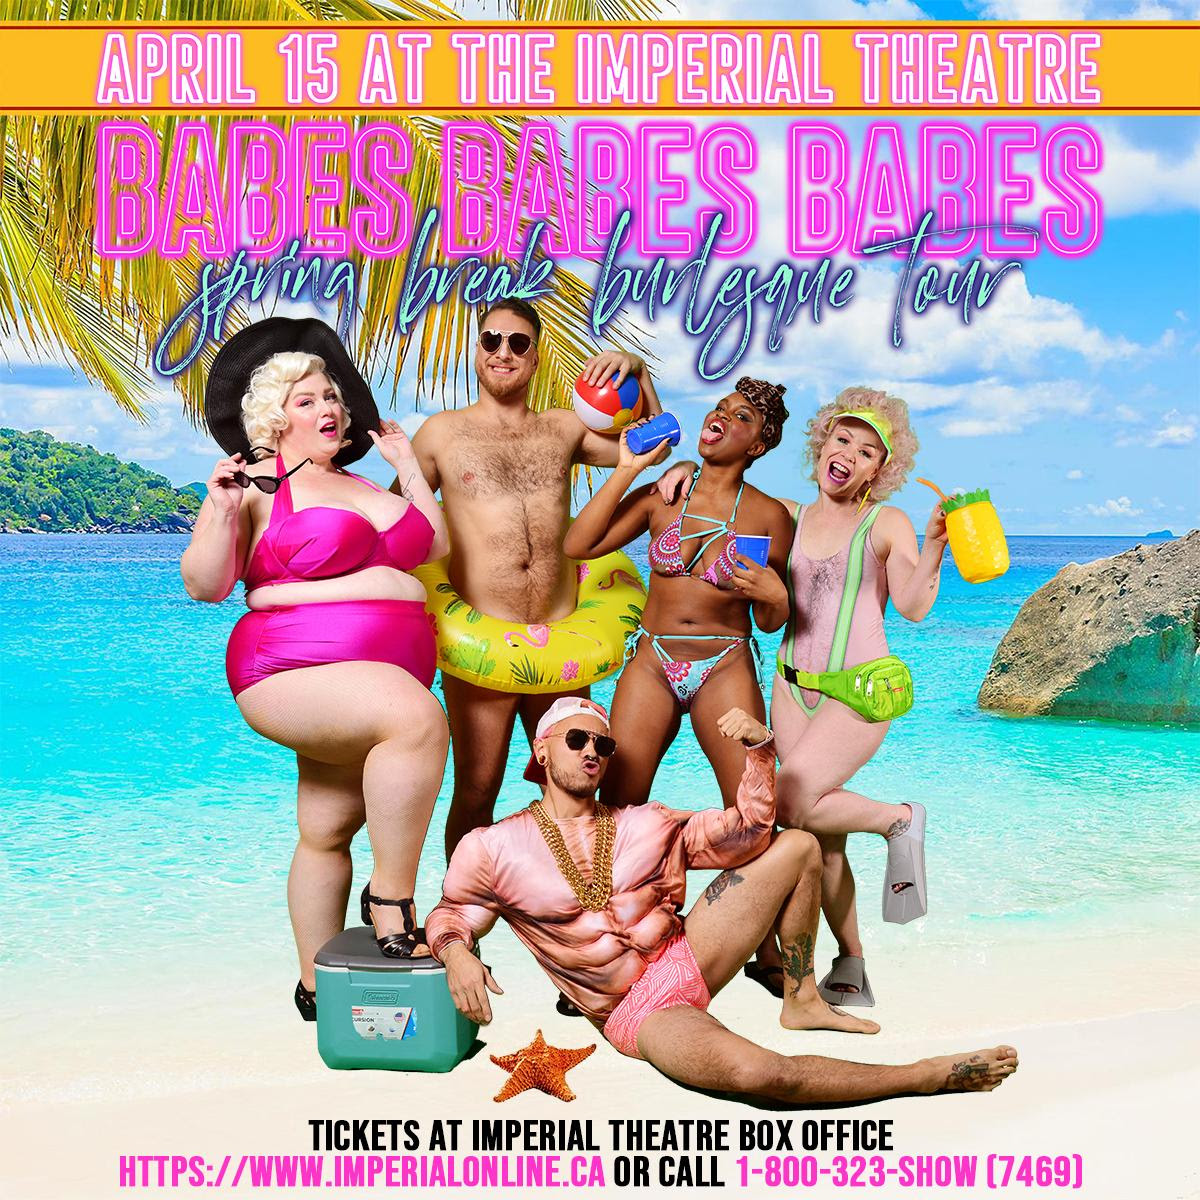 April 15 at the Imperial Theatre. Babes, Babes, Babes spring break burlesque tour